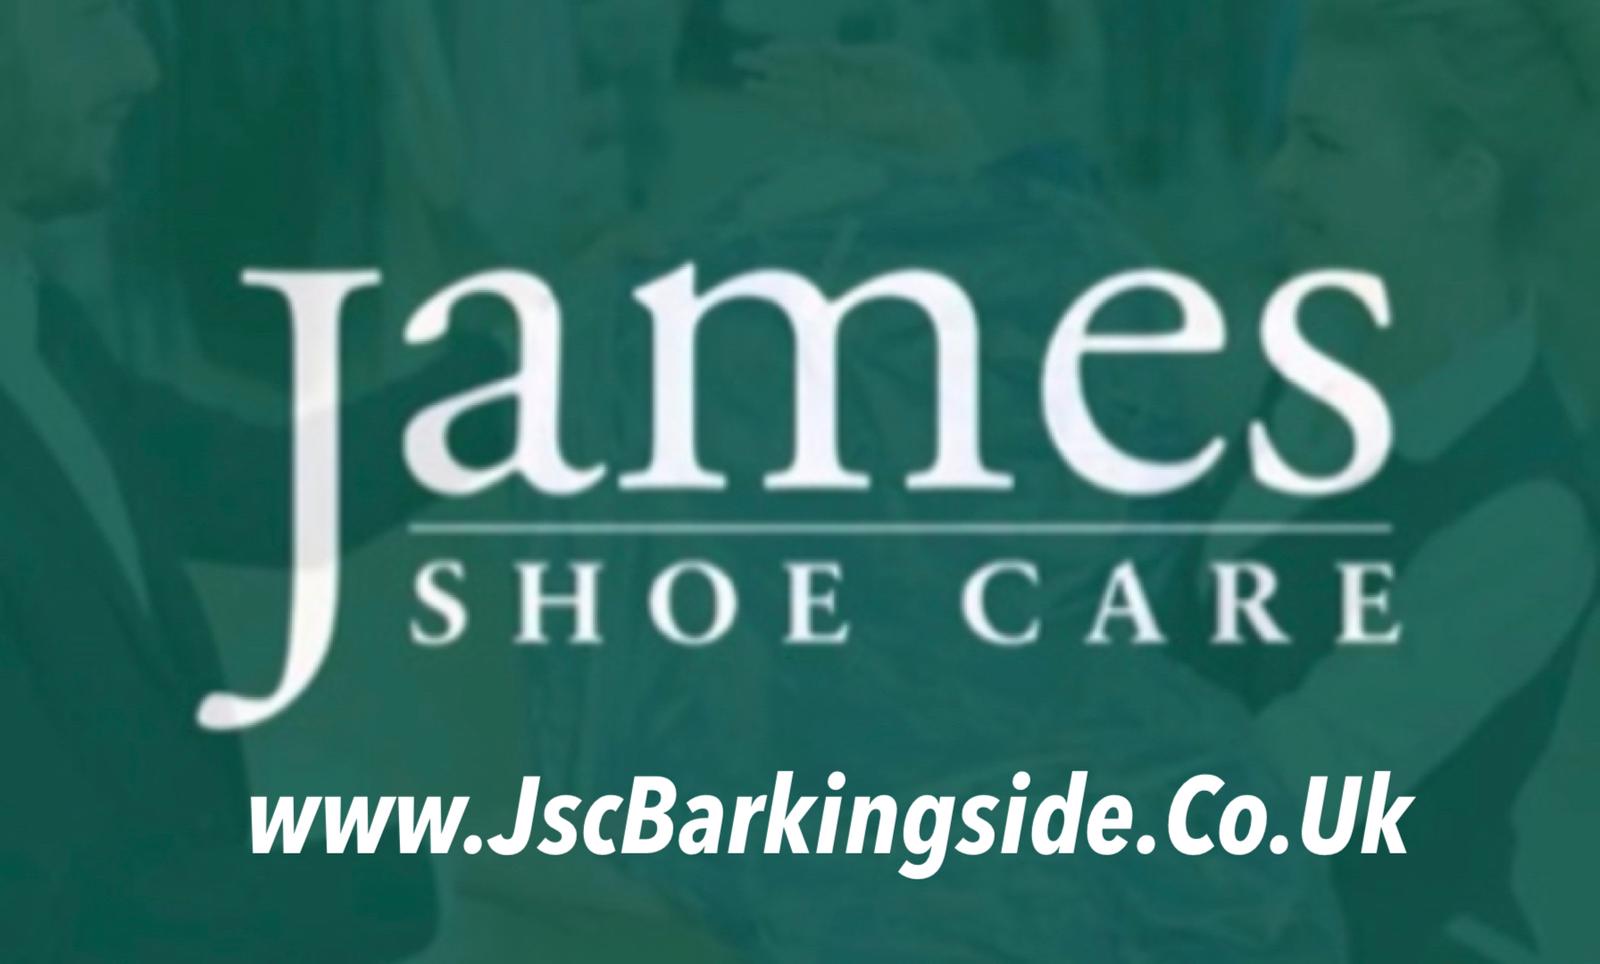 James shoe care